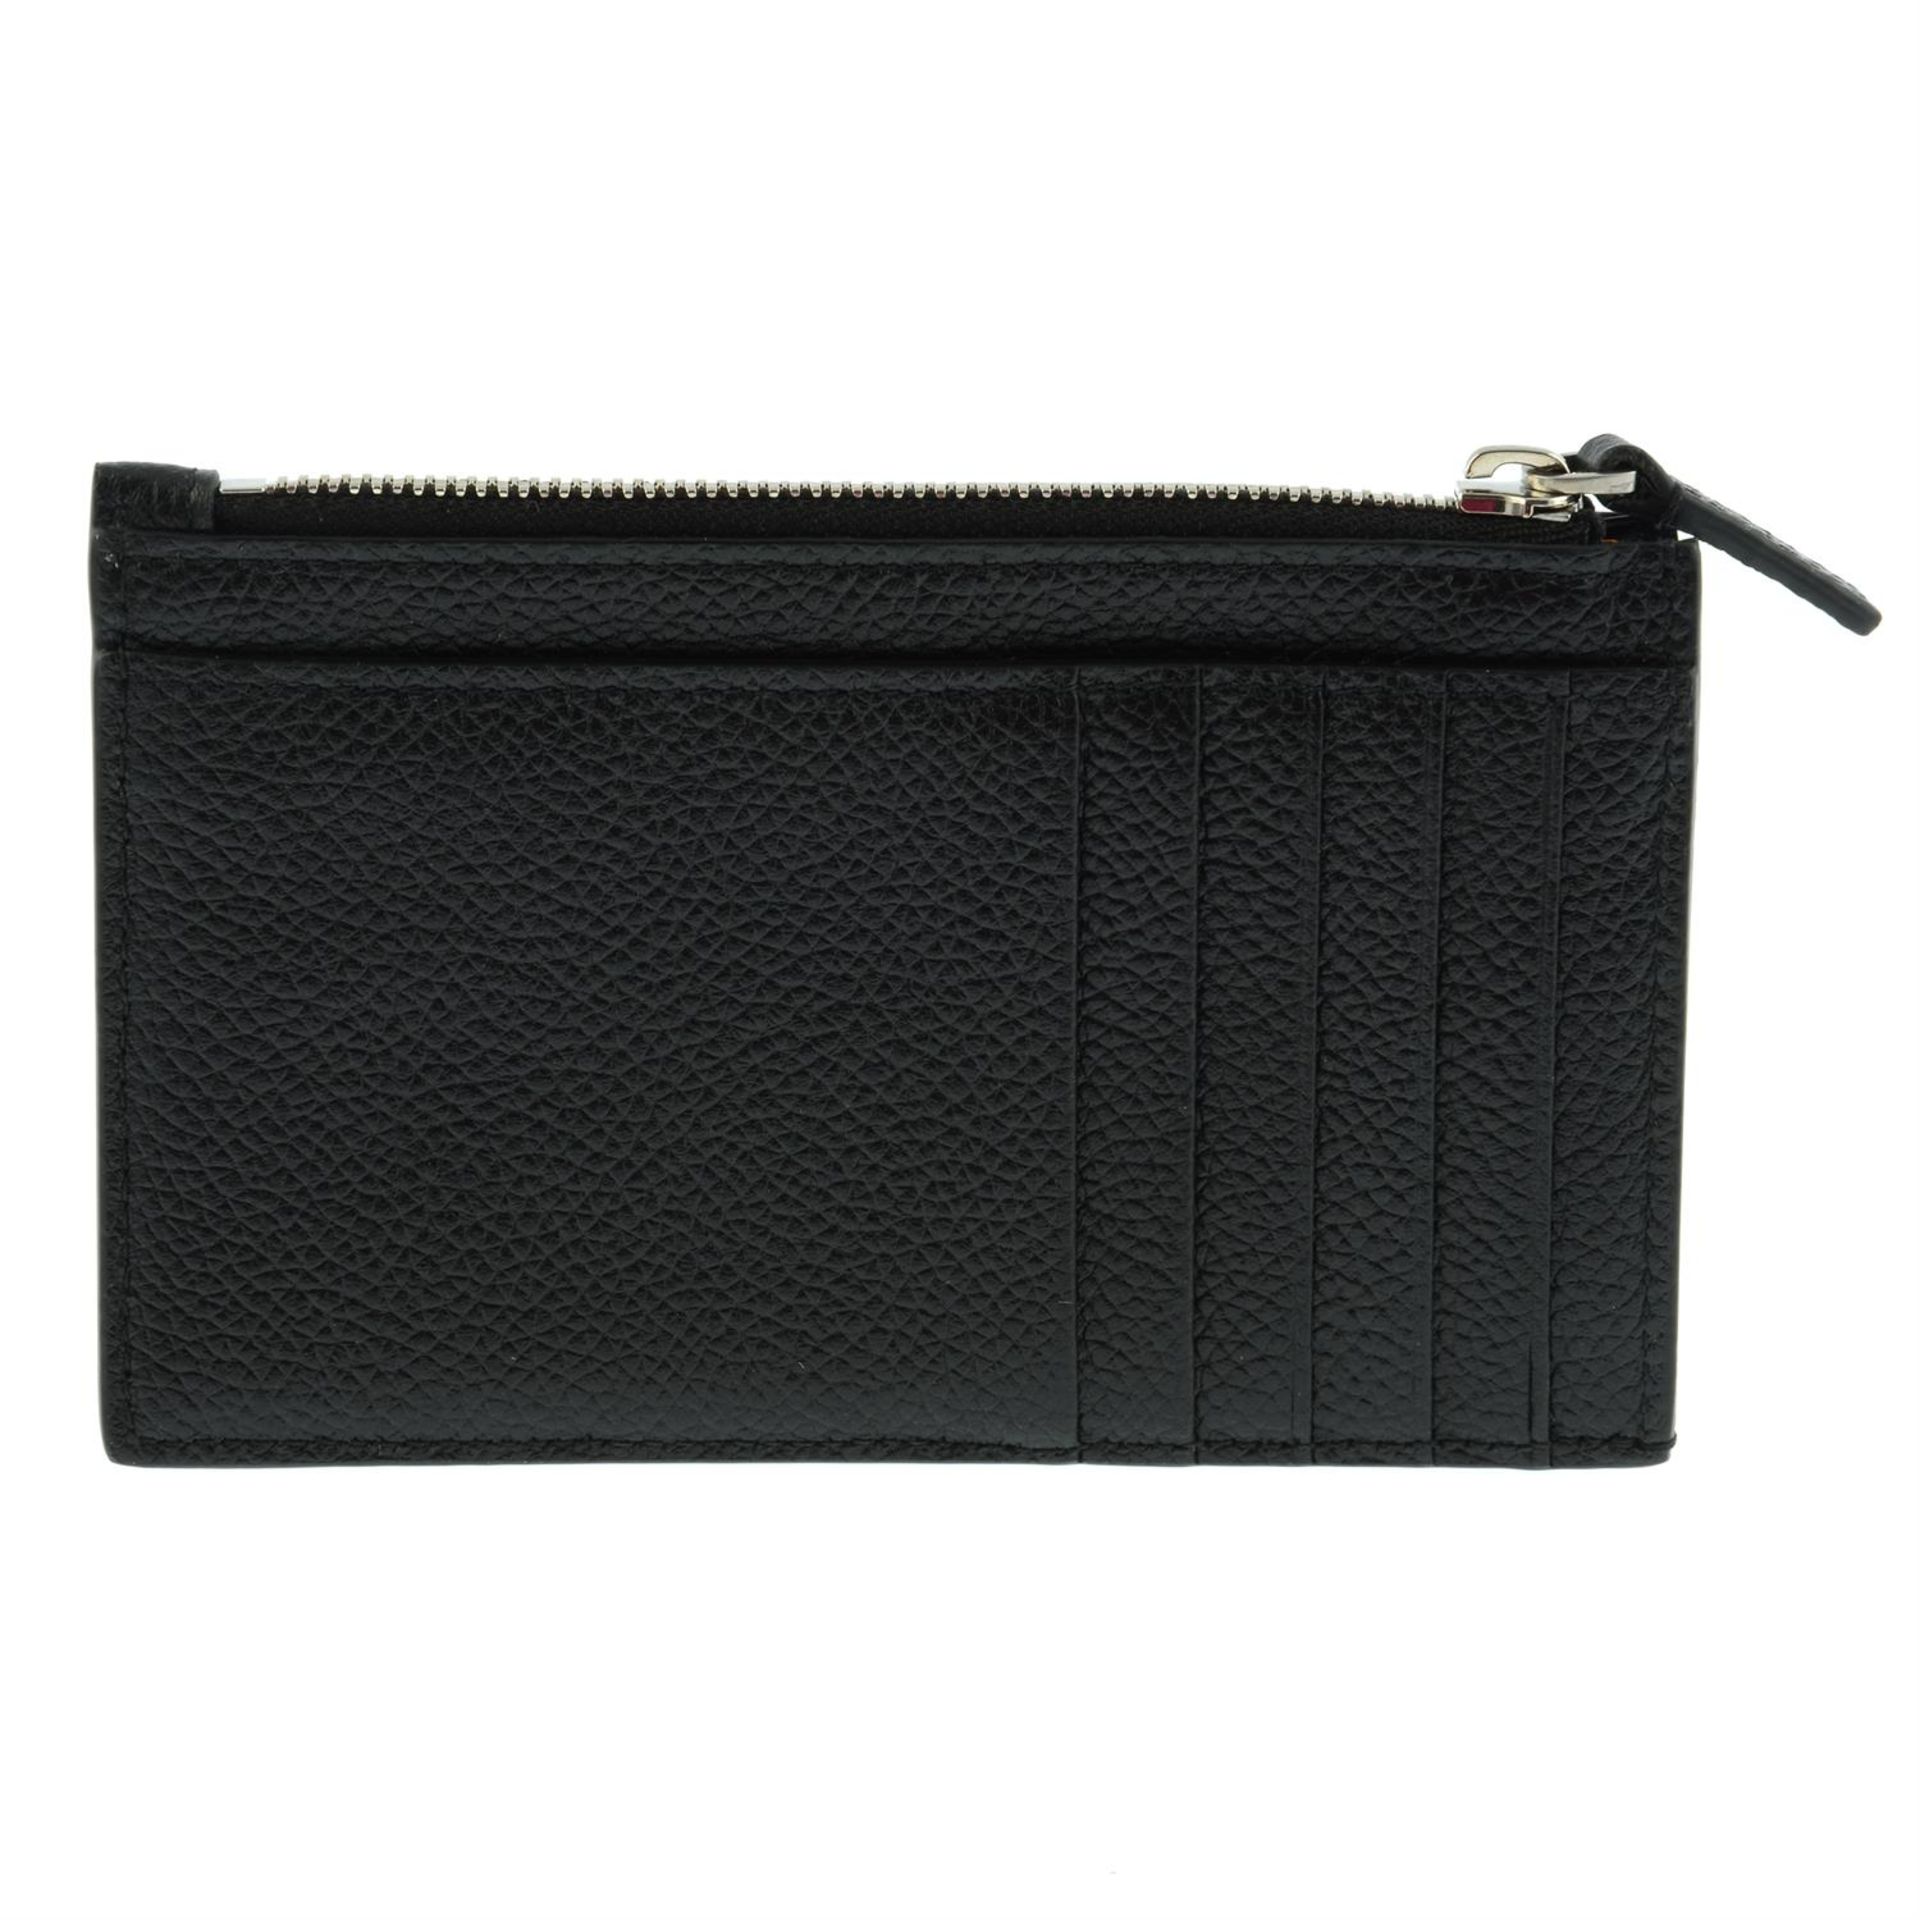 BALENCIAGA - a black leather card wallet. - Image 2 of 2